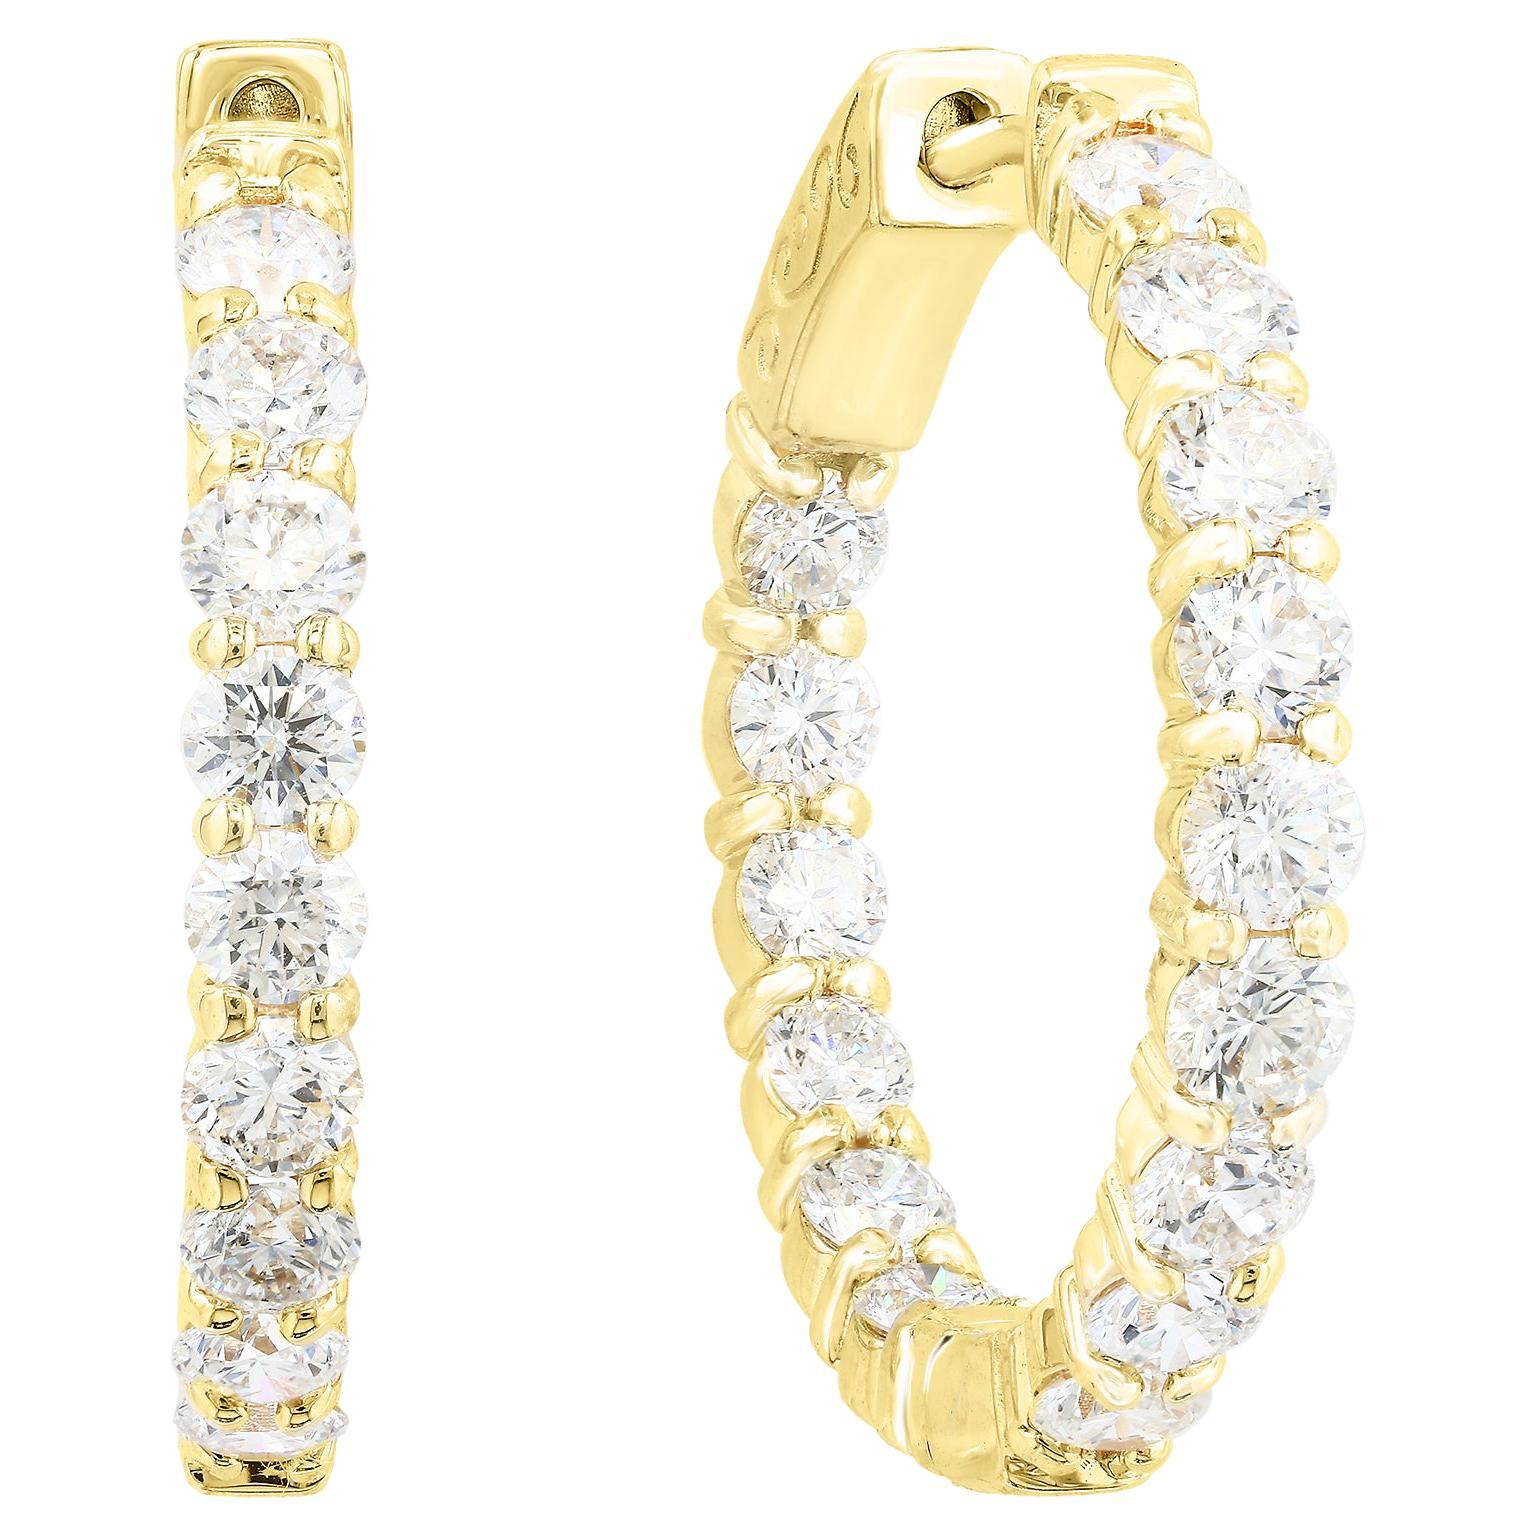 3.15 Carat Round Cut Diamond Hoop Earrings in 14K Yellow Gold For Sale